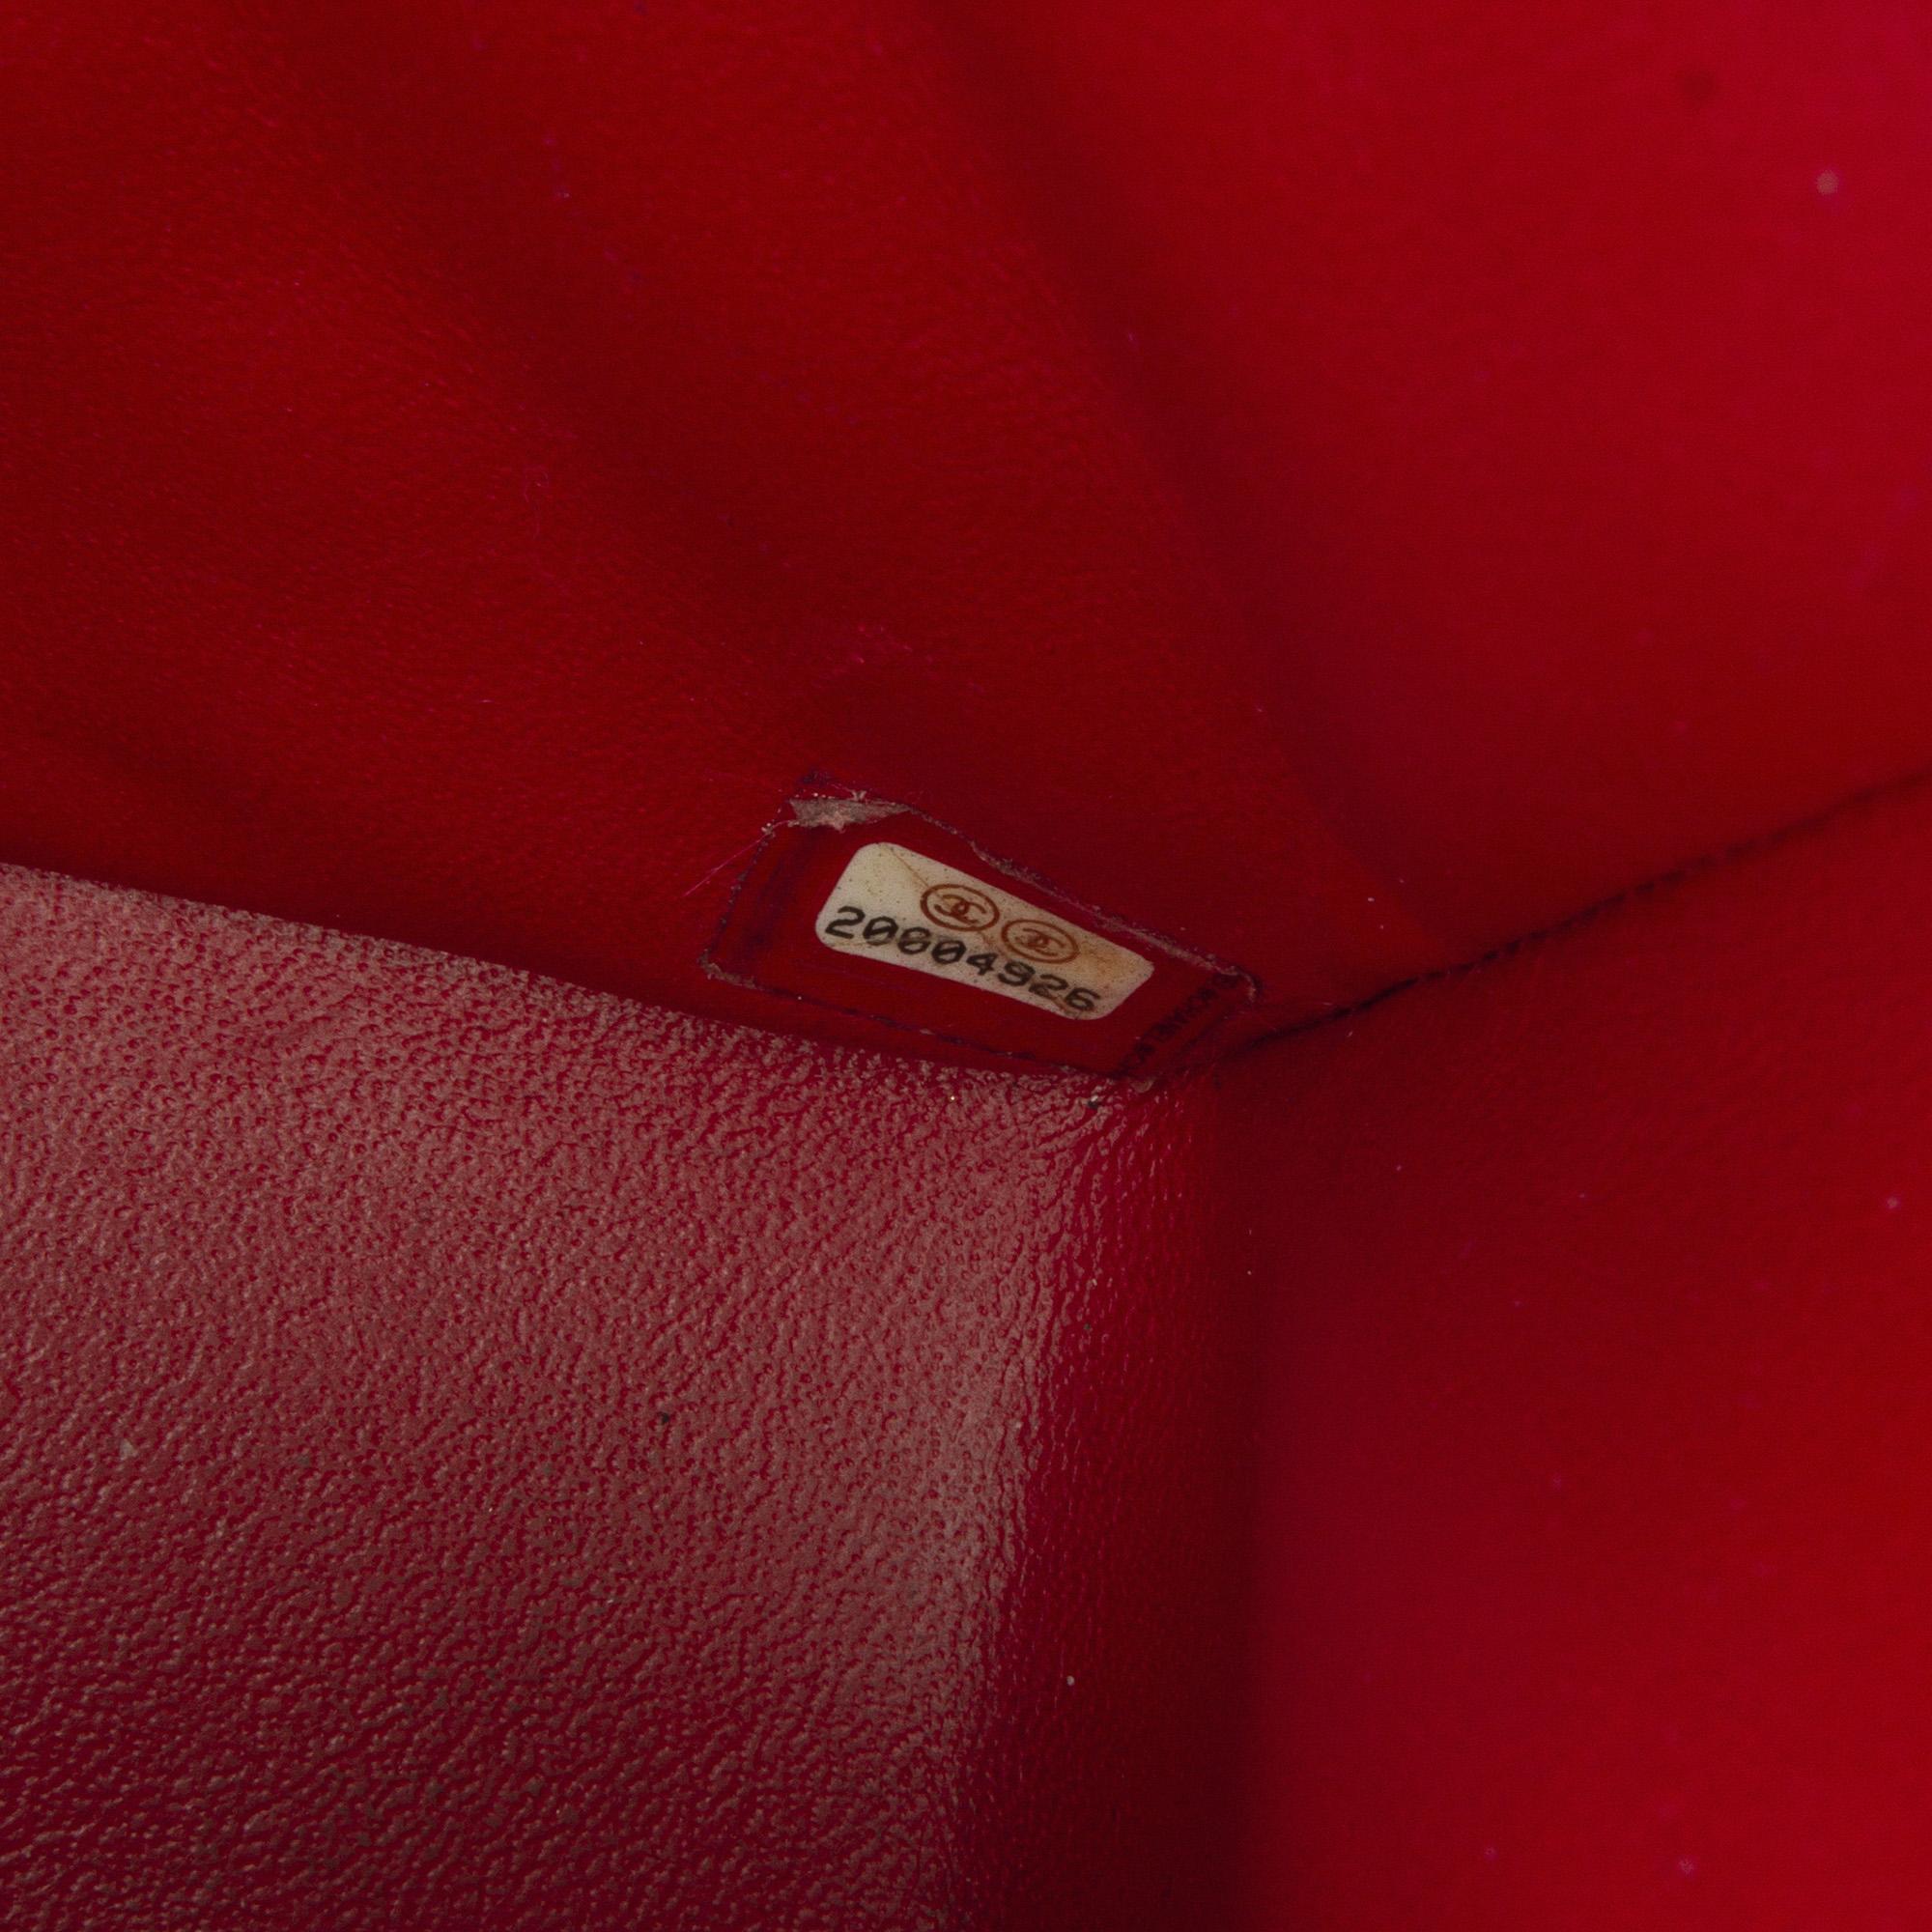 Chanel Red Mini Classic Lambskin Square Flap